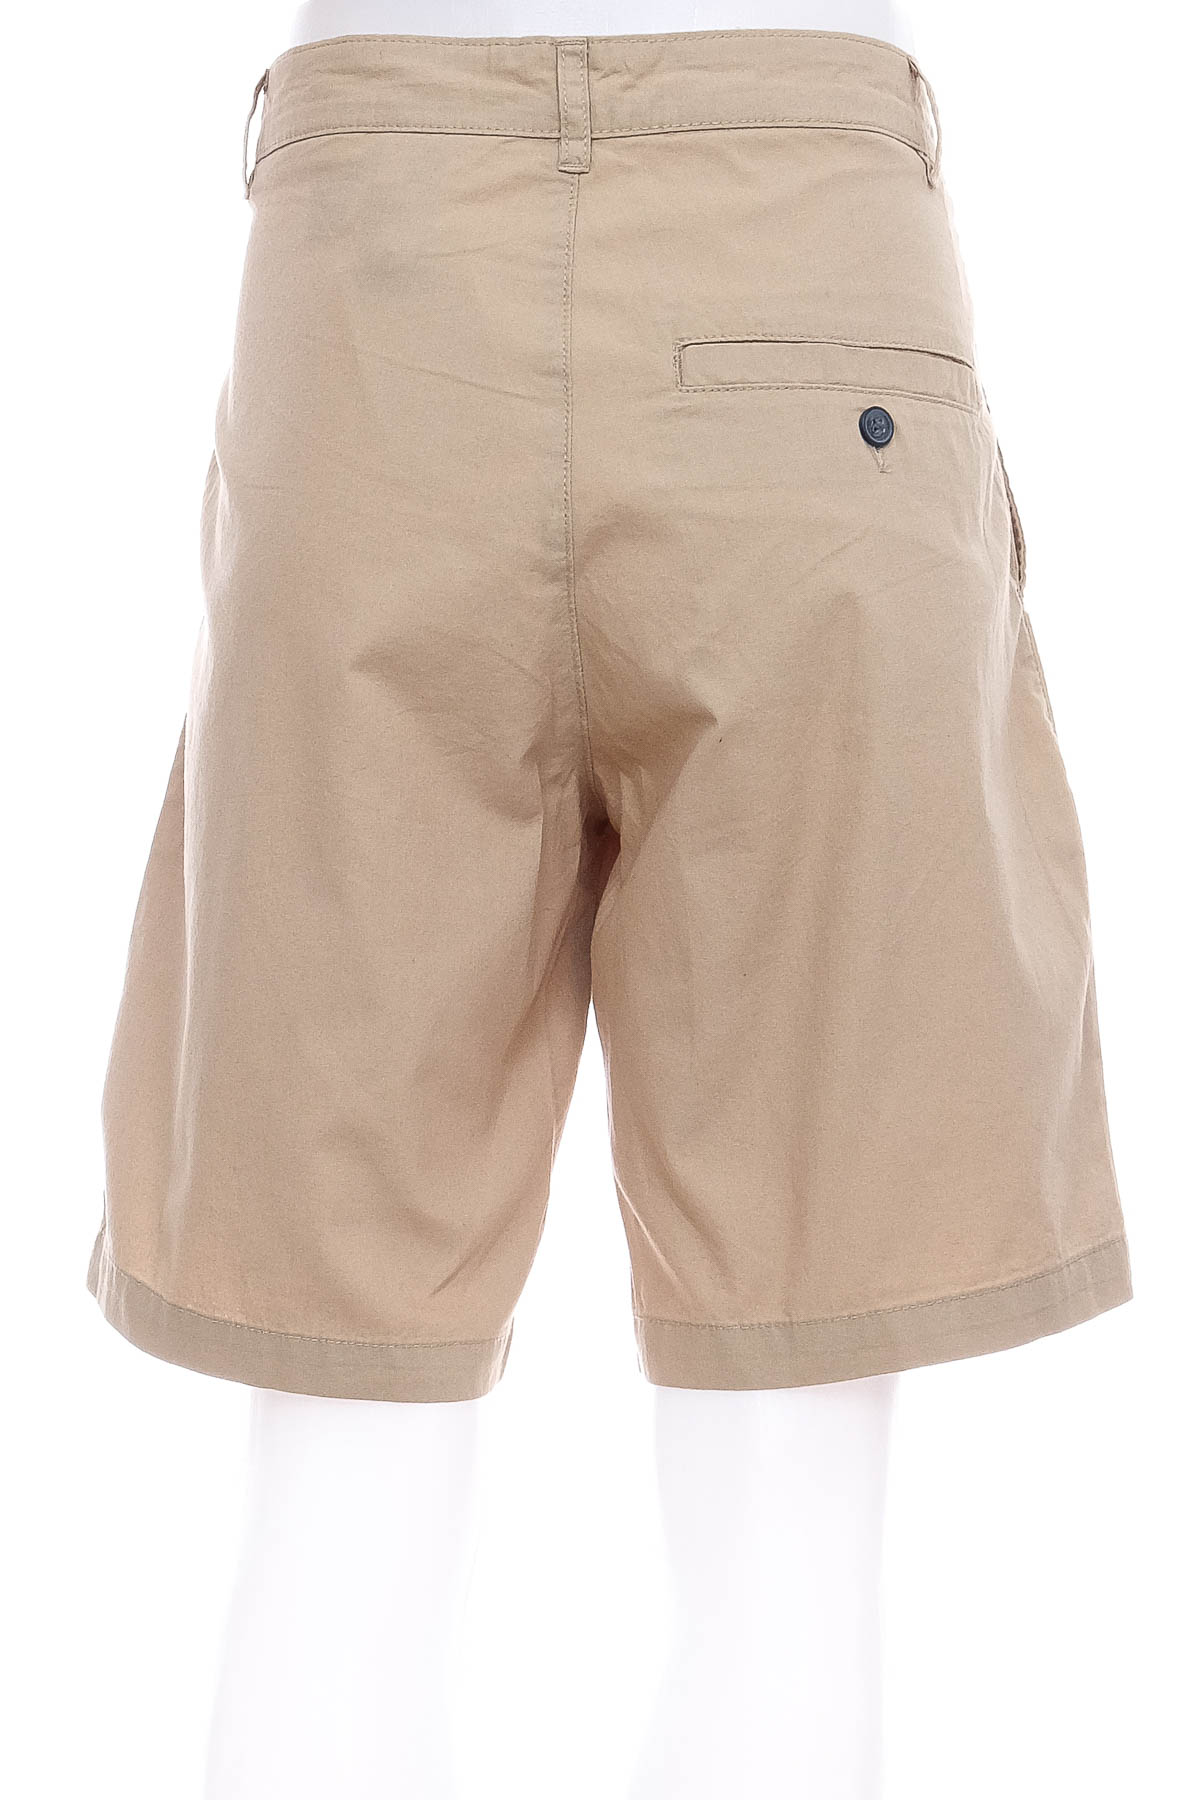 Men's shorts - DIVIDED - 1